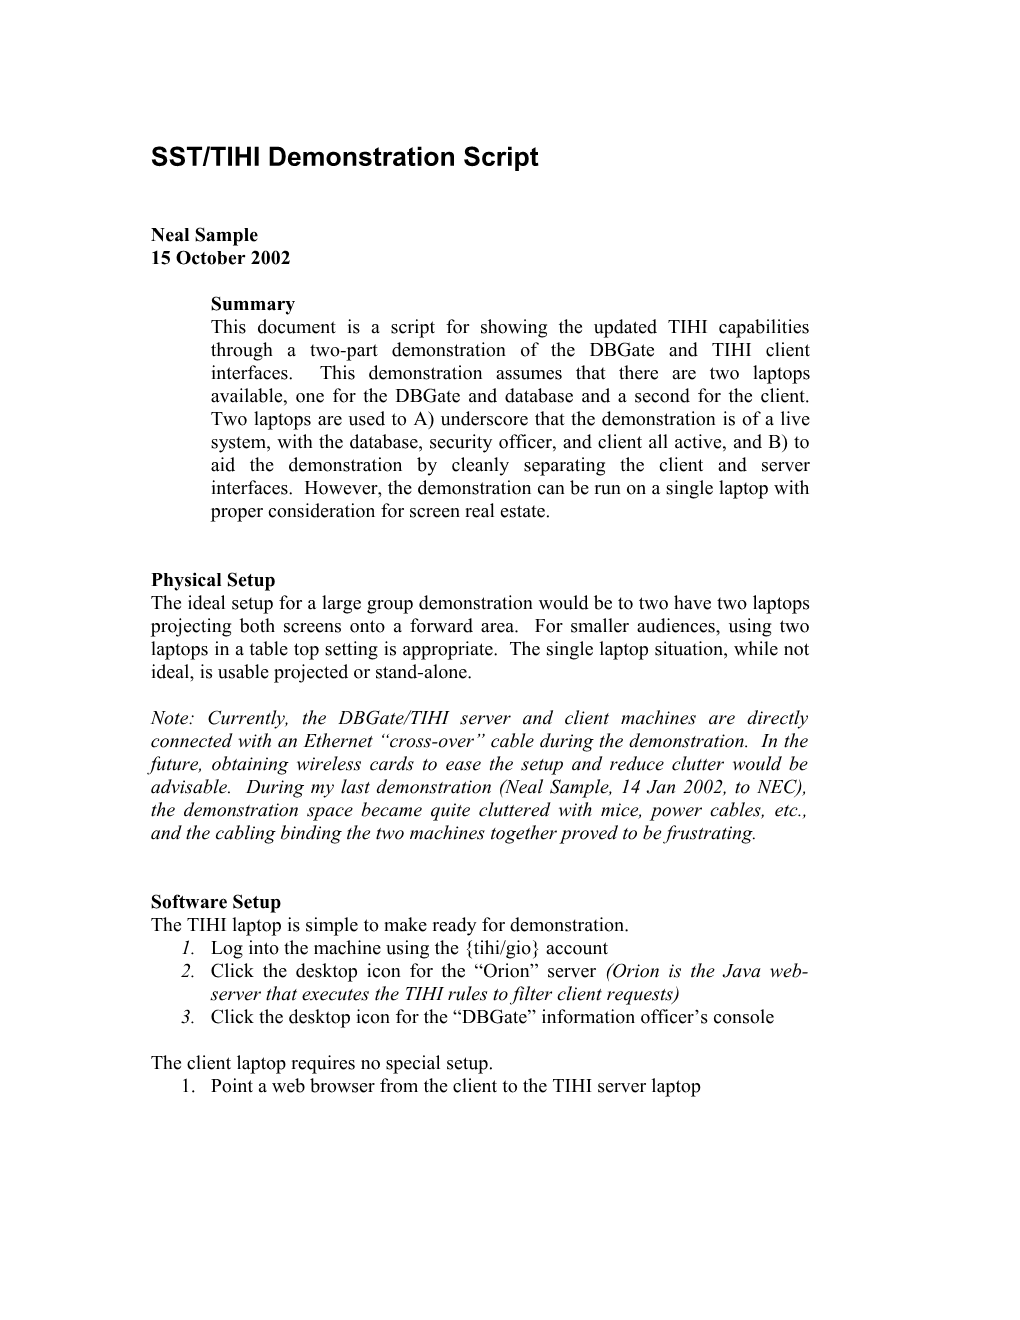 TIHI Demonstration Script